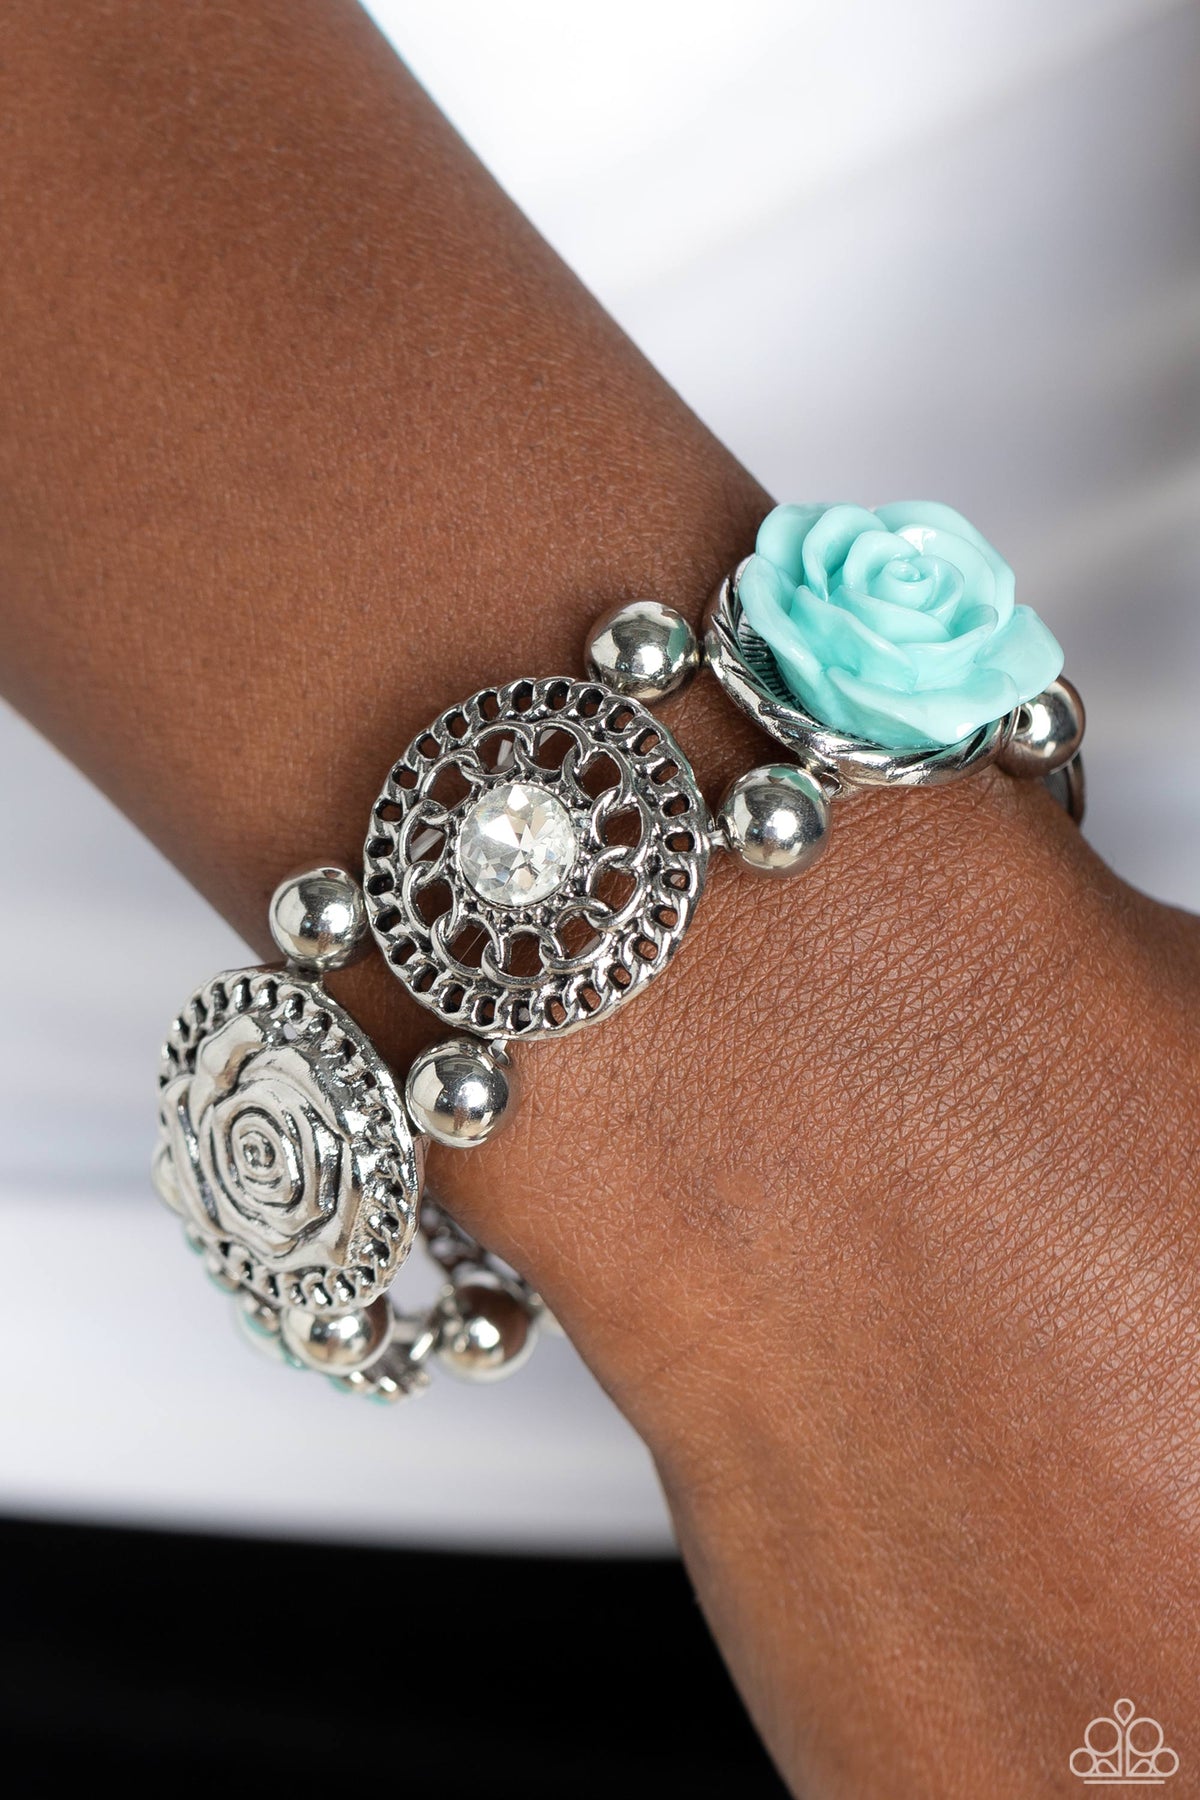 Optimistic Oasis Blue Rose Flower Bracelet - Paparazzi Accessories-on model - CarasShop.com - $5 Jewelry by Cara Jewels